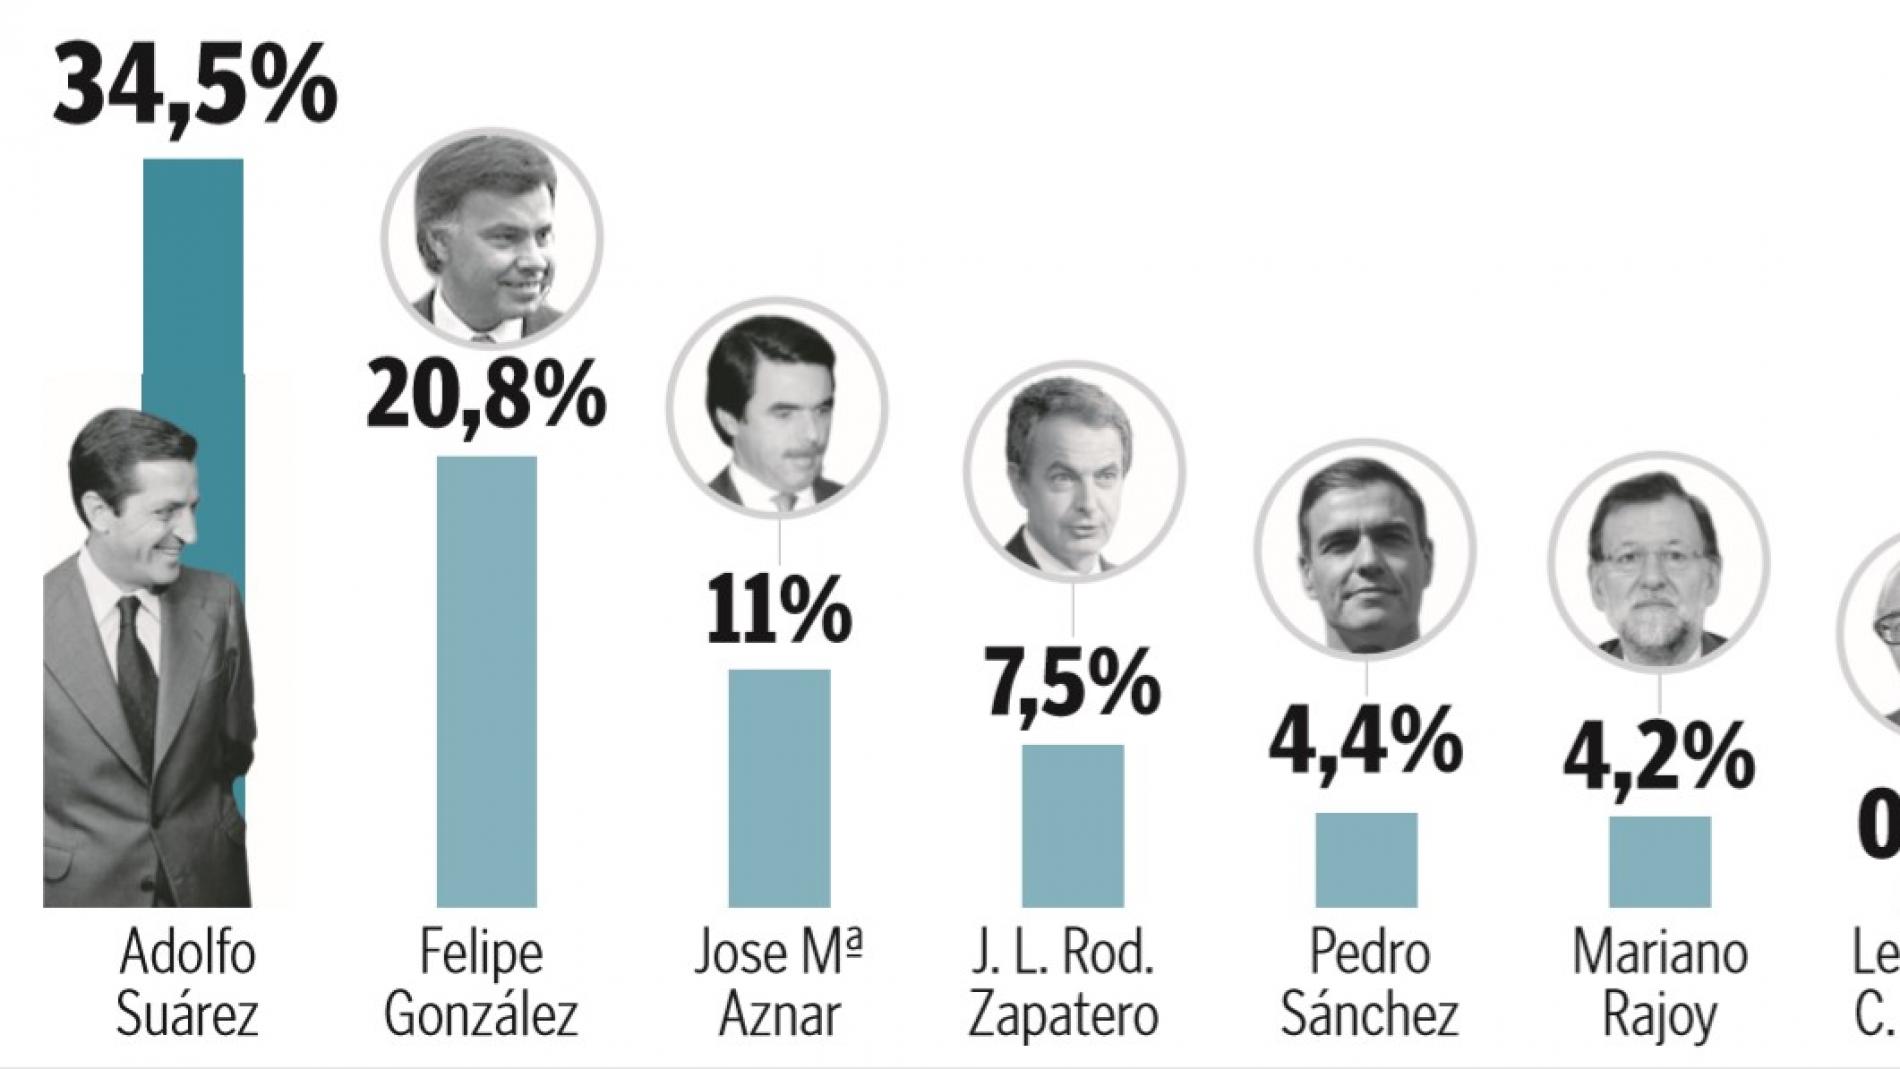 Adolfo Suárez y Felipe González son los presidentes mejor valorados